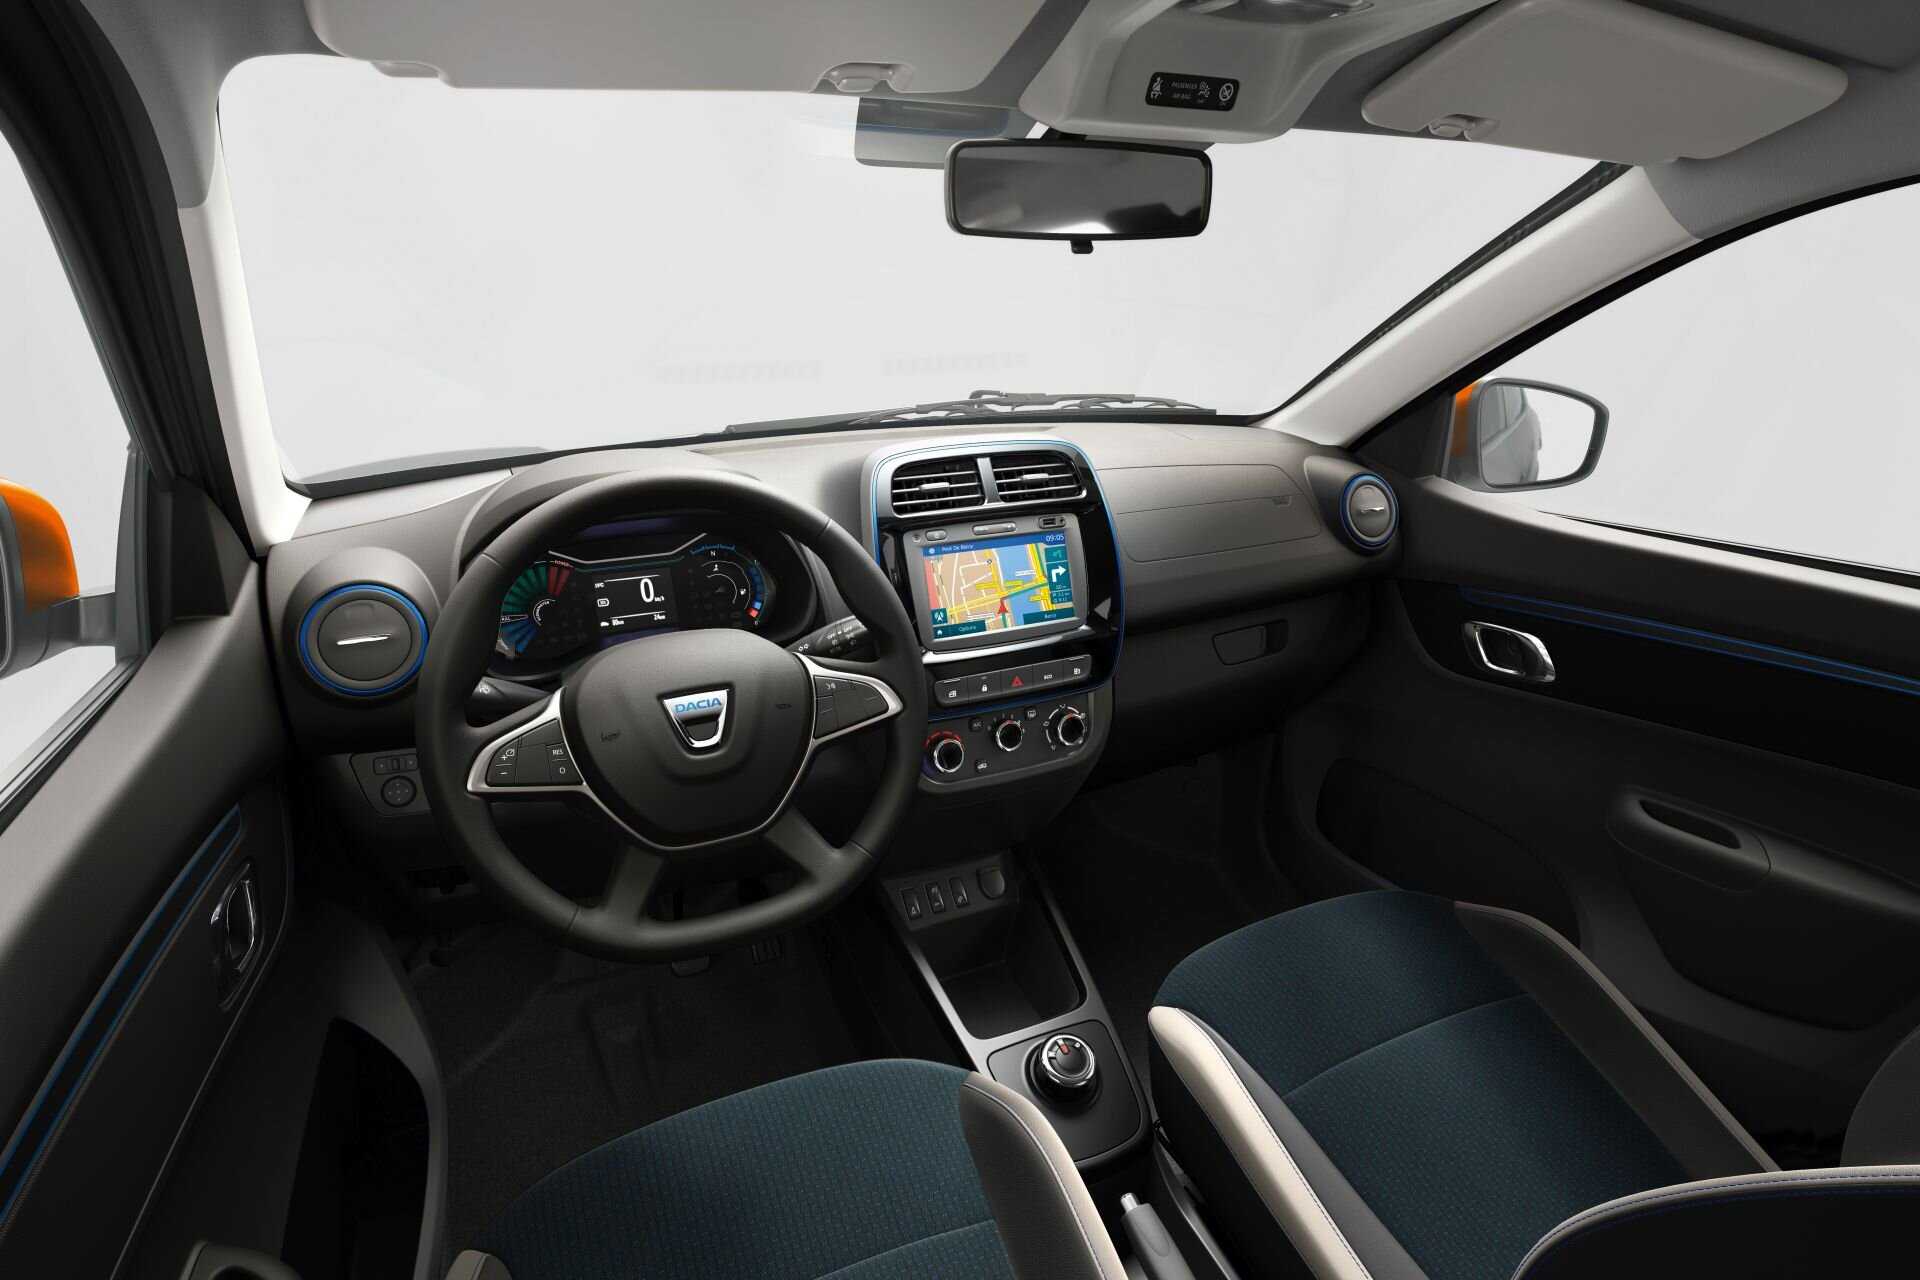 Renault megane 2.0 cvt dynamique (08.2012 - 06.2014) - технические характеристики